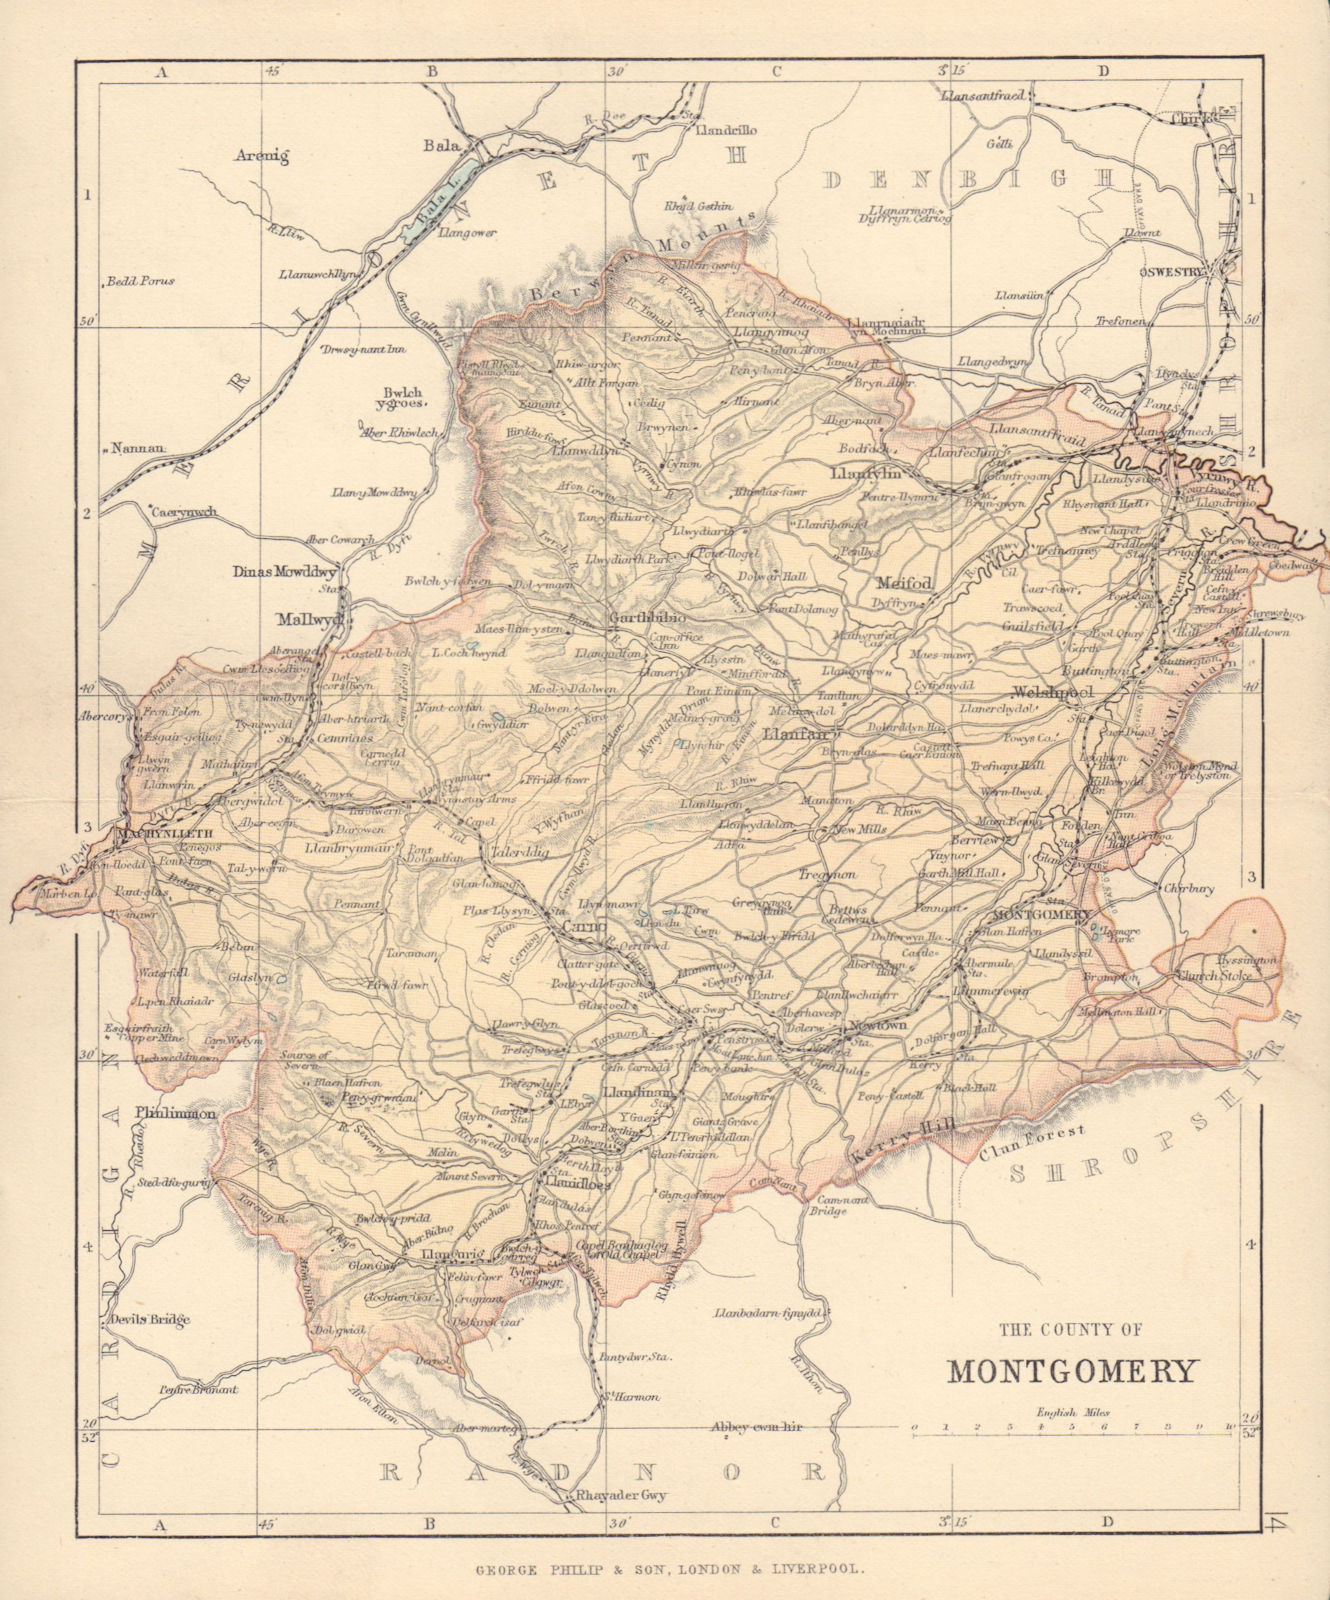 Associate Product MONTGOMERYSHIRE "County of Montgomery" Welshpool Wales BARTHOLOMEW 1890 map